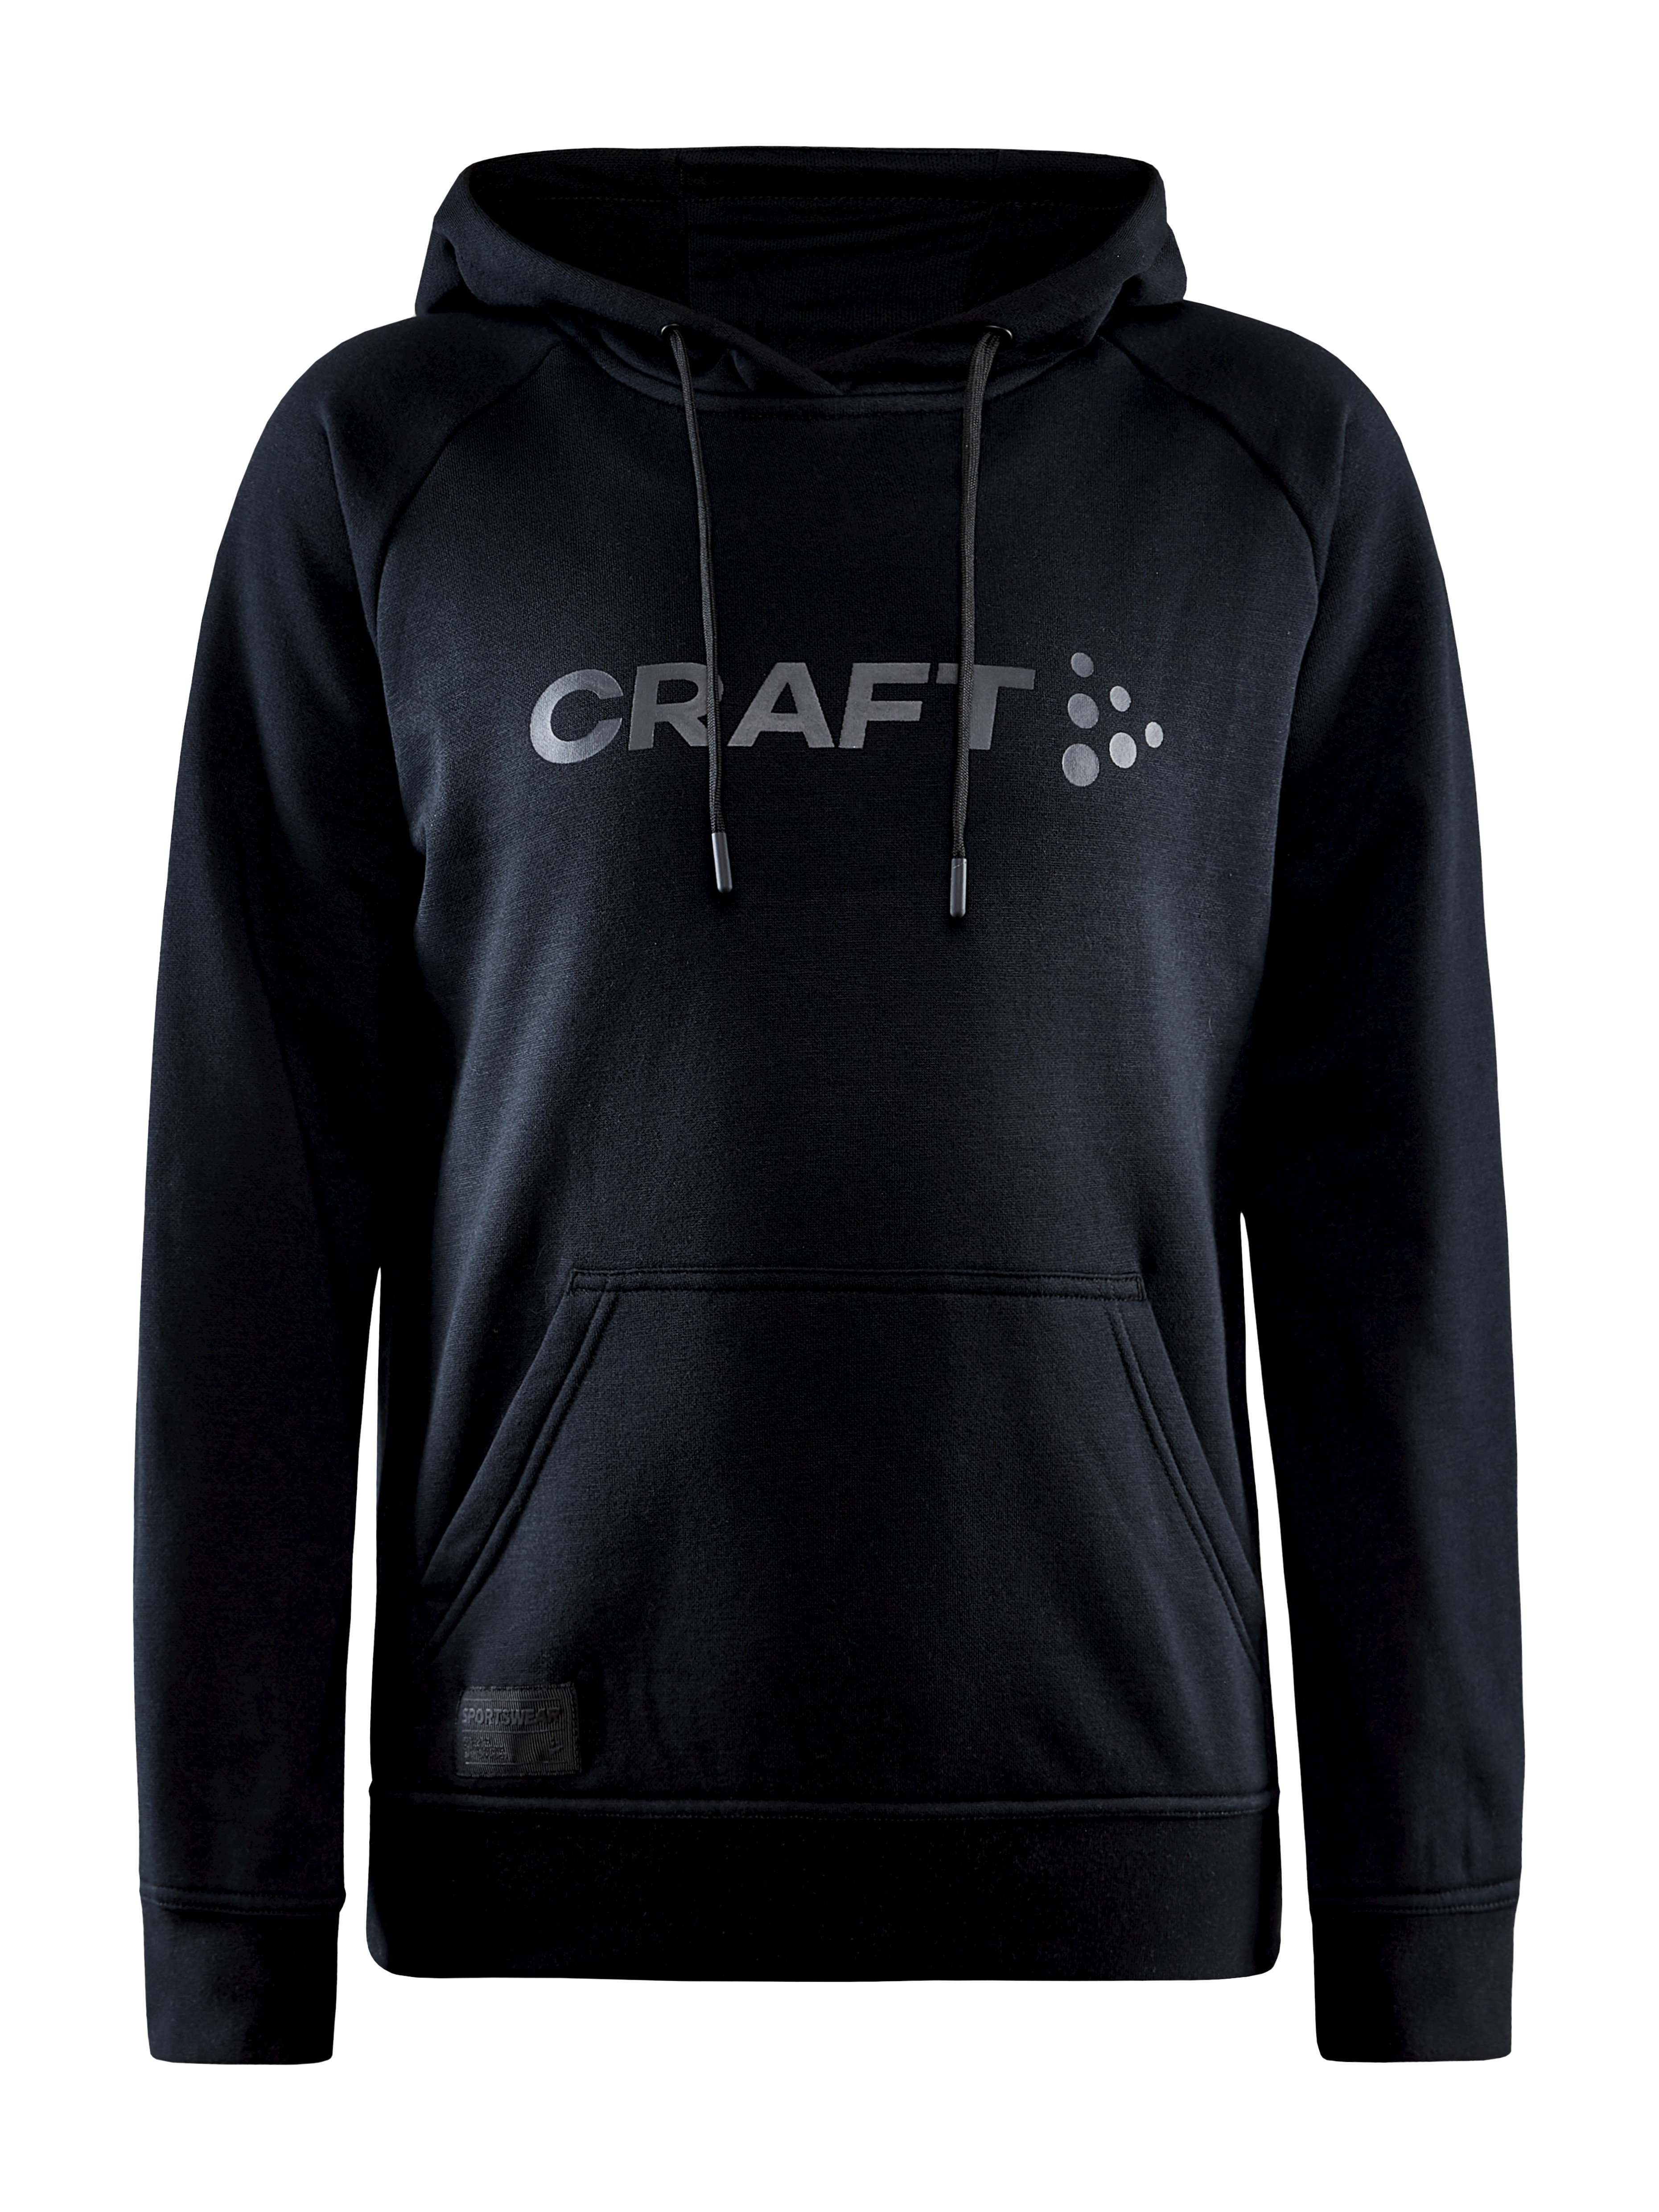 CORE Craft hood W - Black